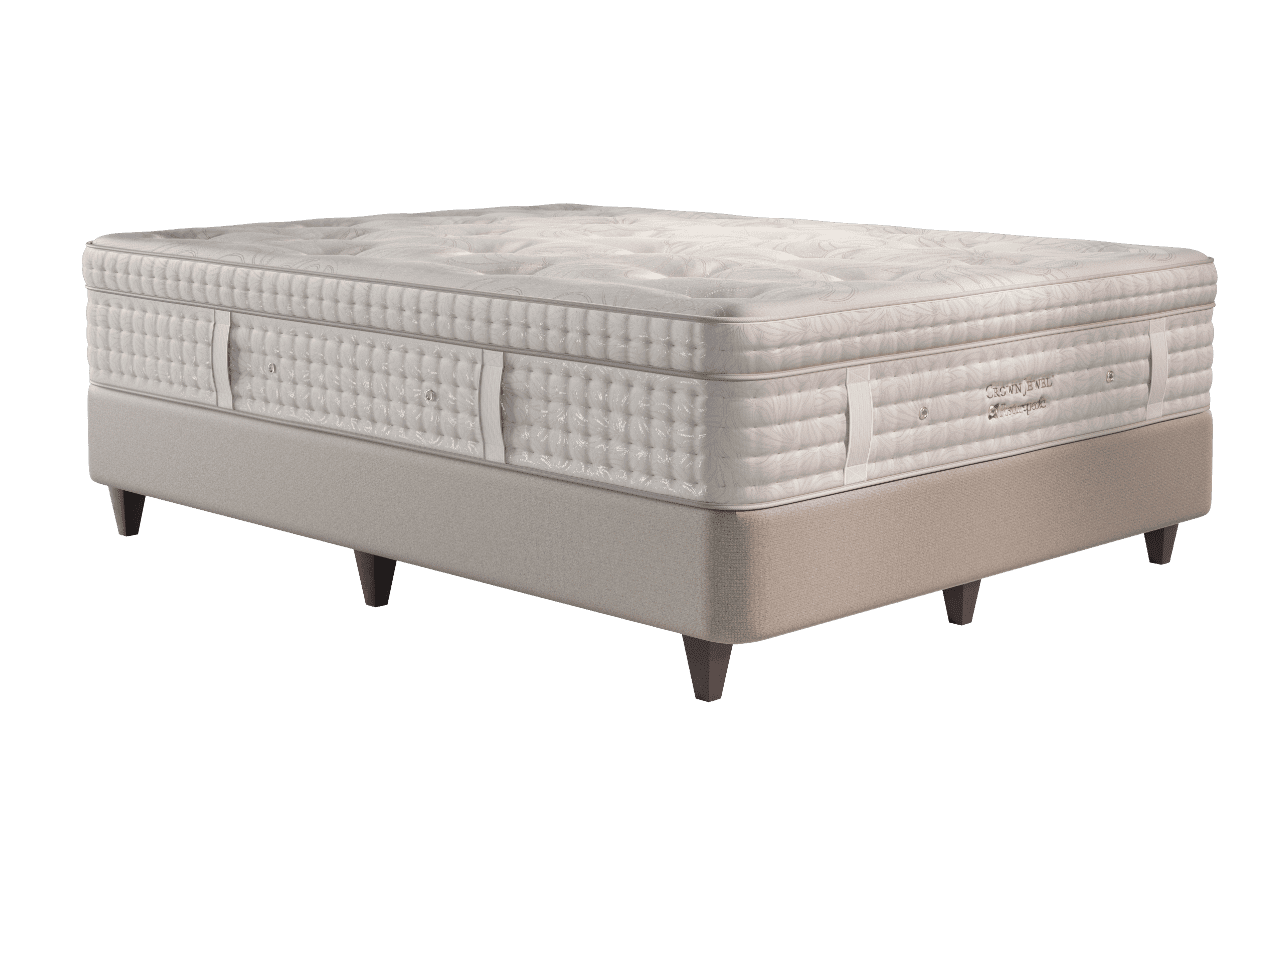 sealy crown jewel crib mattress review